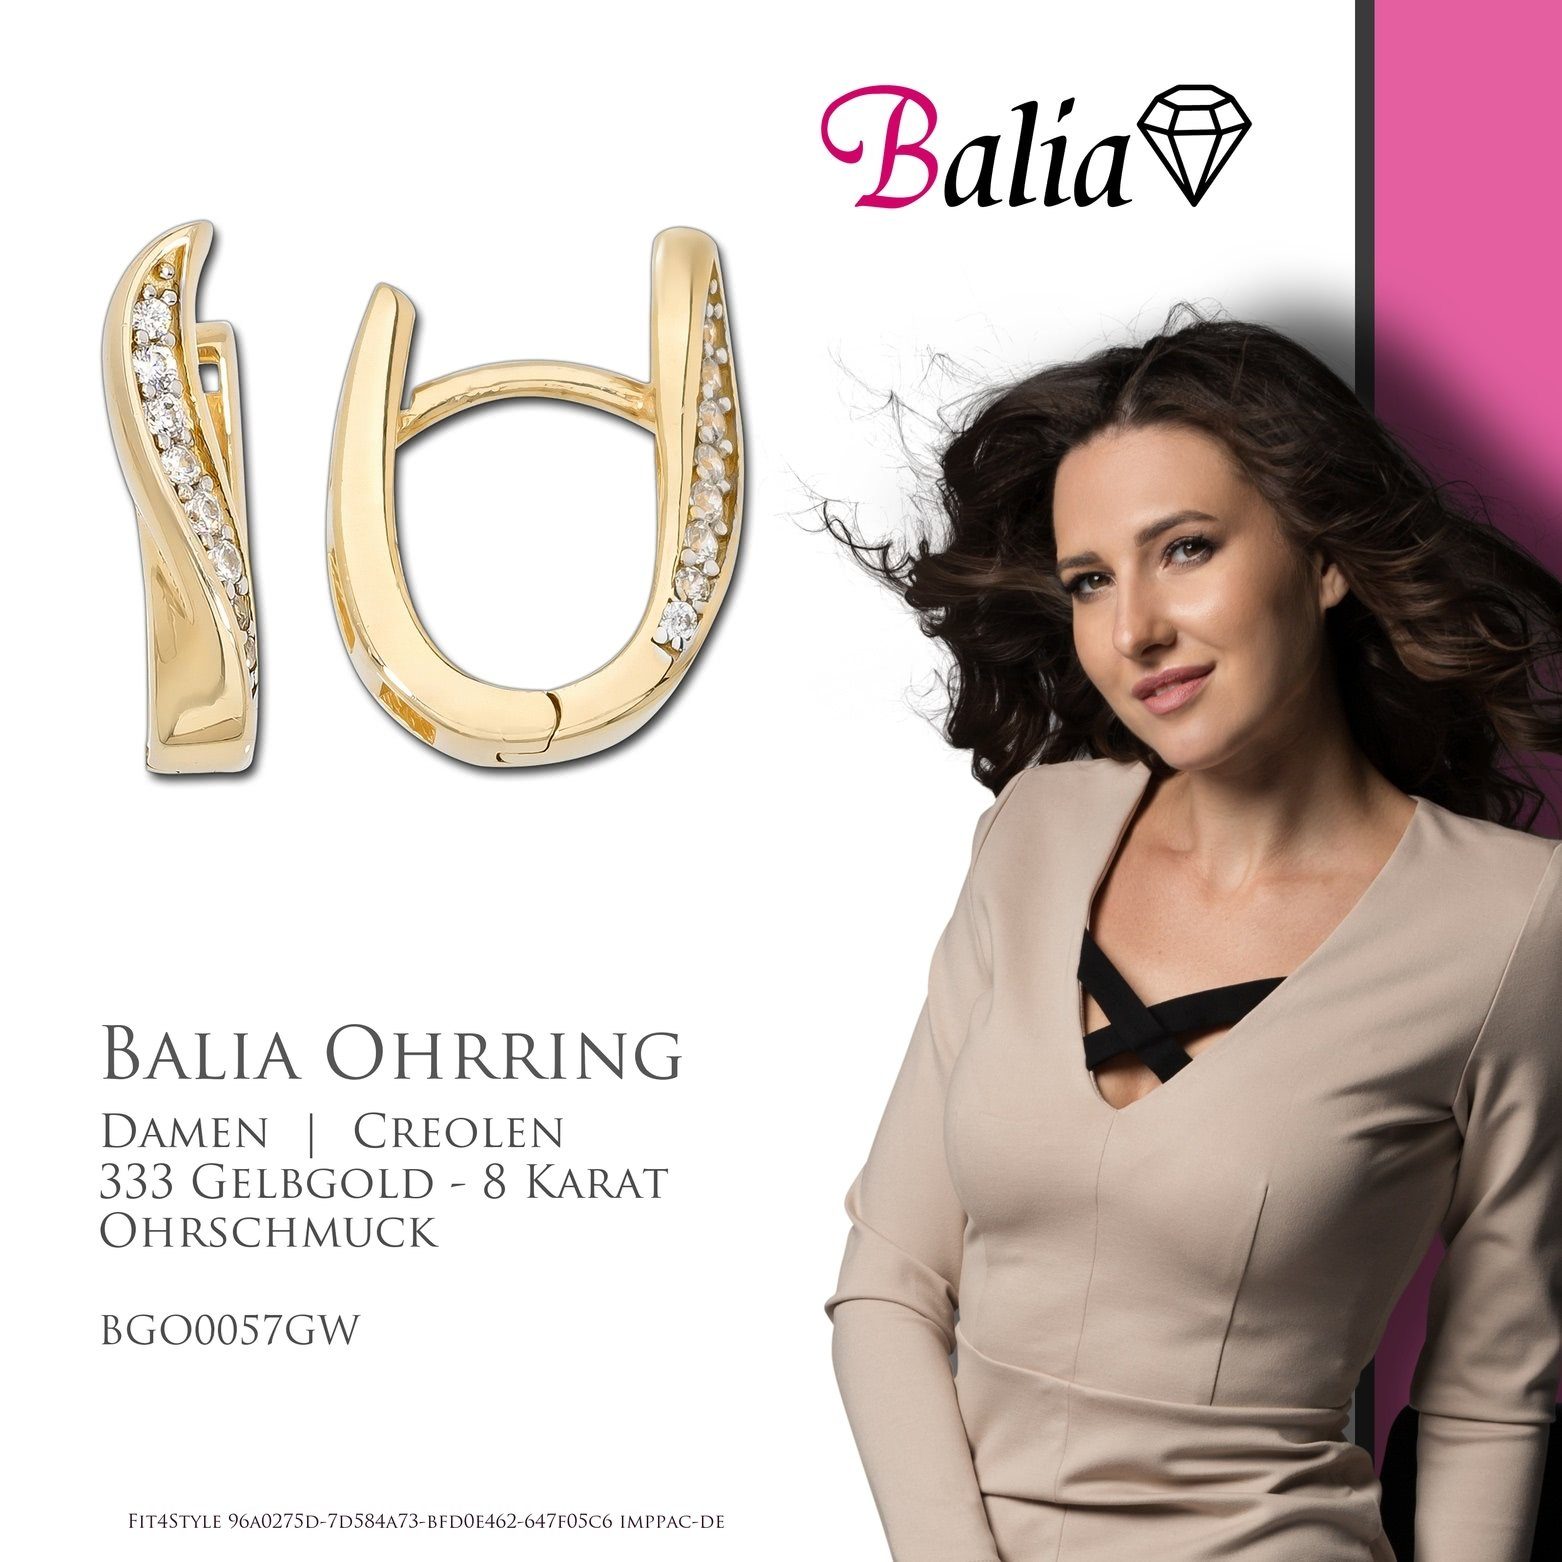 Balia (Creolen), 333 gold 8 Paar Creolen Karat, Elegance Farbe: Balia aus Gelbgold Gelbgold weiß, 8Karat - Damen 333 Creolen Creolen Damen